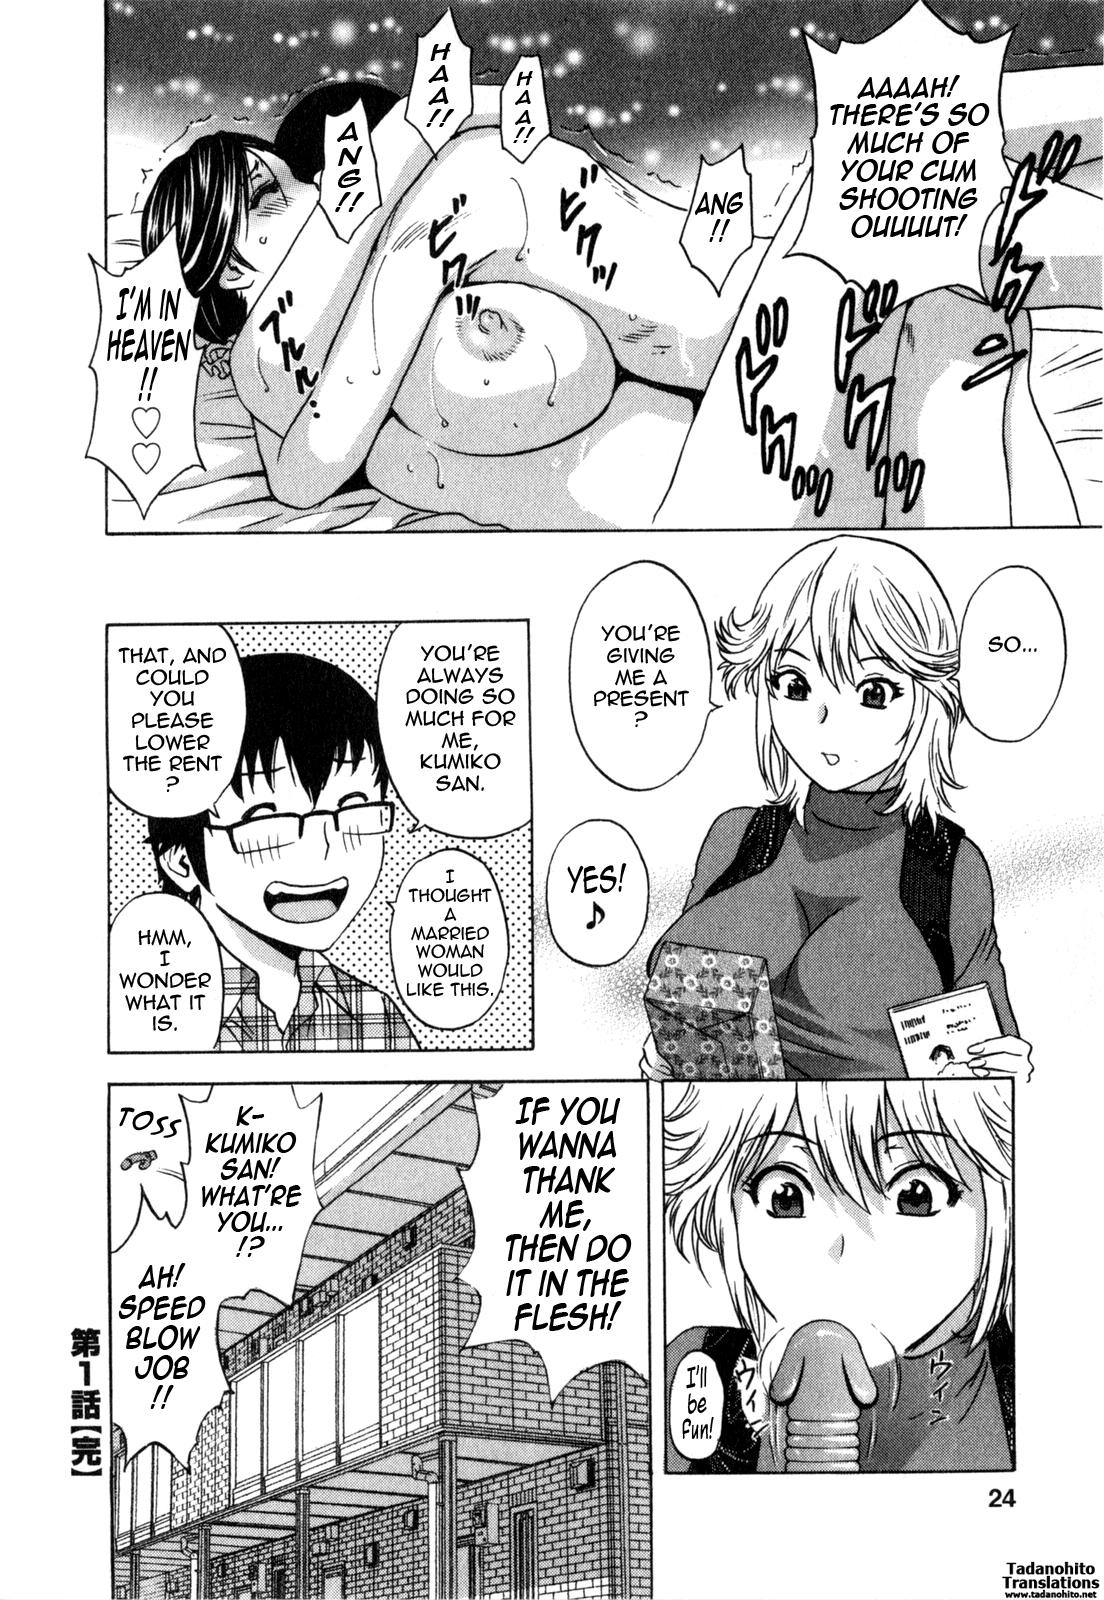 [Hidemaru] Life with Married Women Just Like a Manga 3 - Ch. 1-7 [English] {Tadanohito} 25